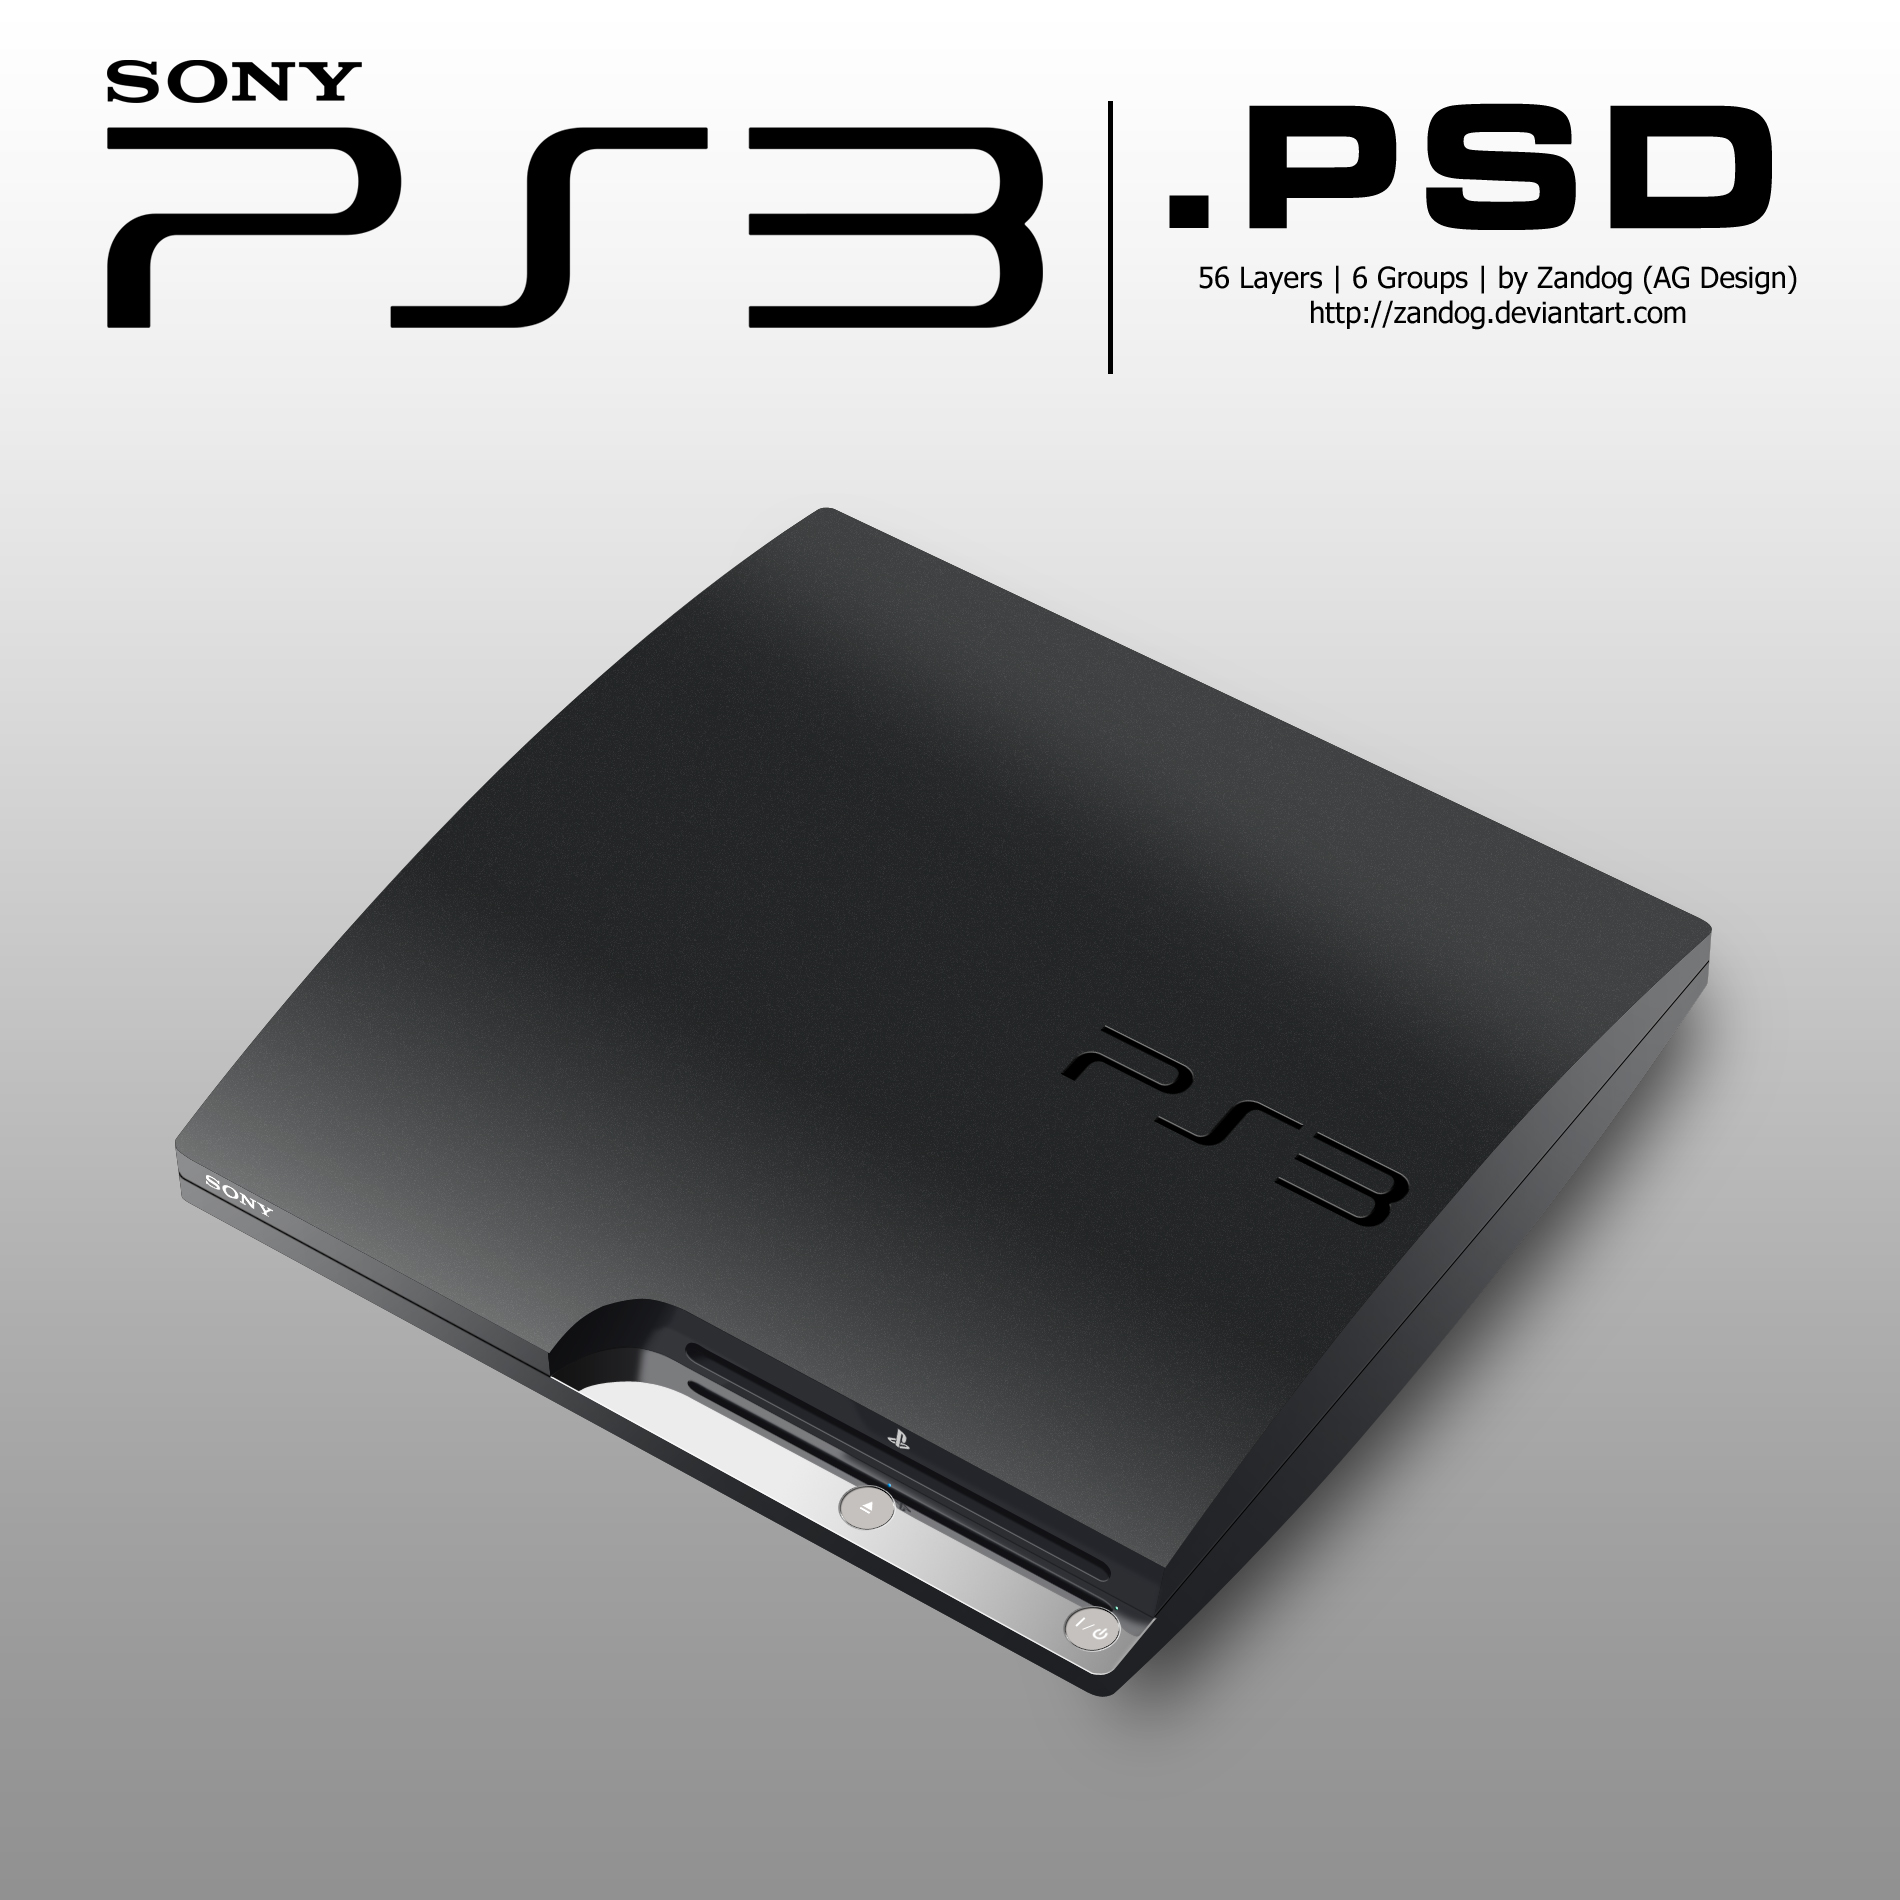 Sony Playstation 3 Slim .PSD